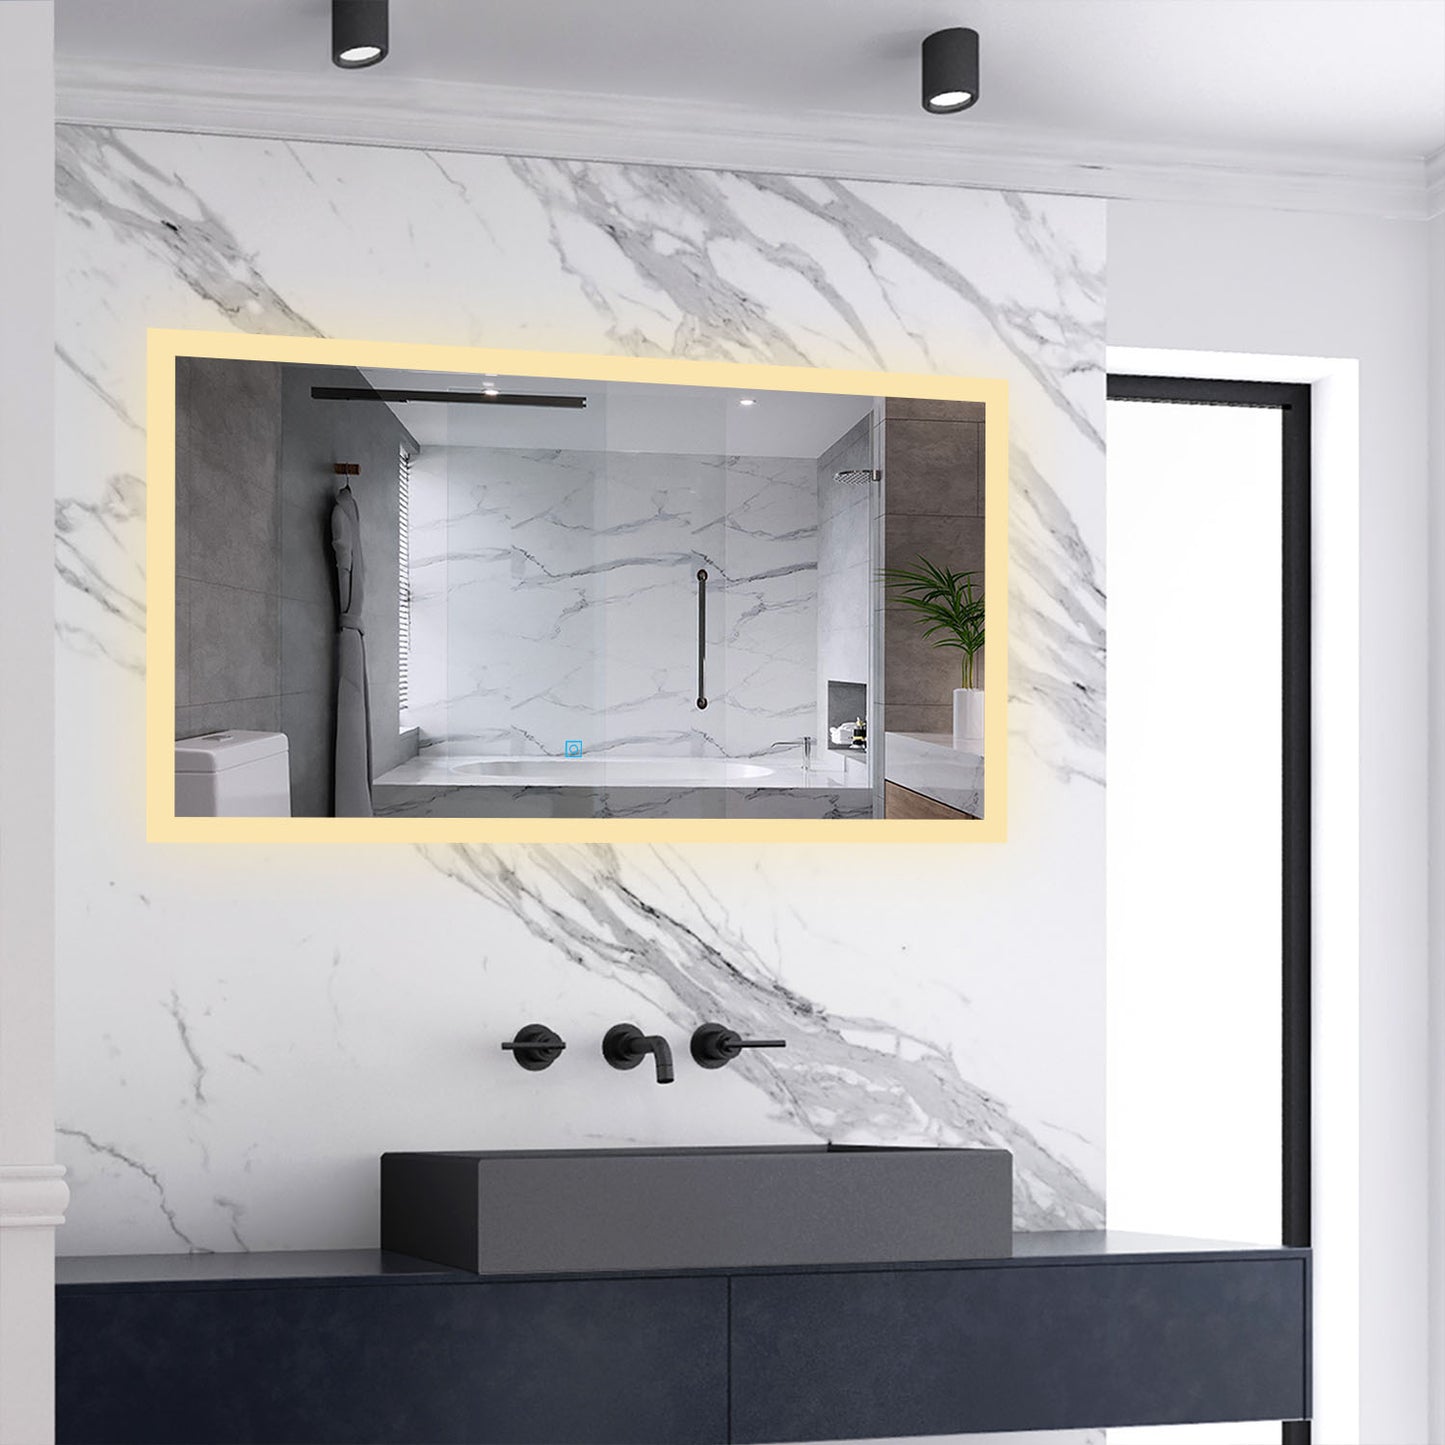 LED-Lichtspiegel Badspiegel 100x60 cm Touch-Schalter Wand+Memory+Beschlagfrei